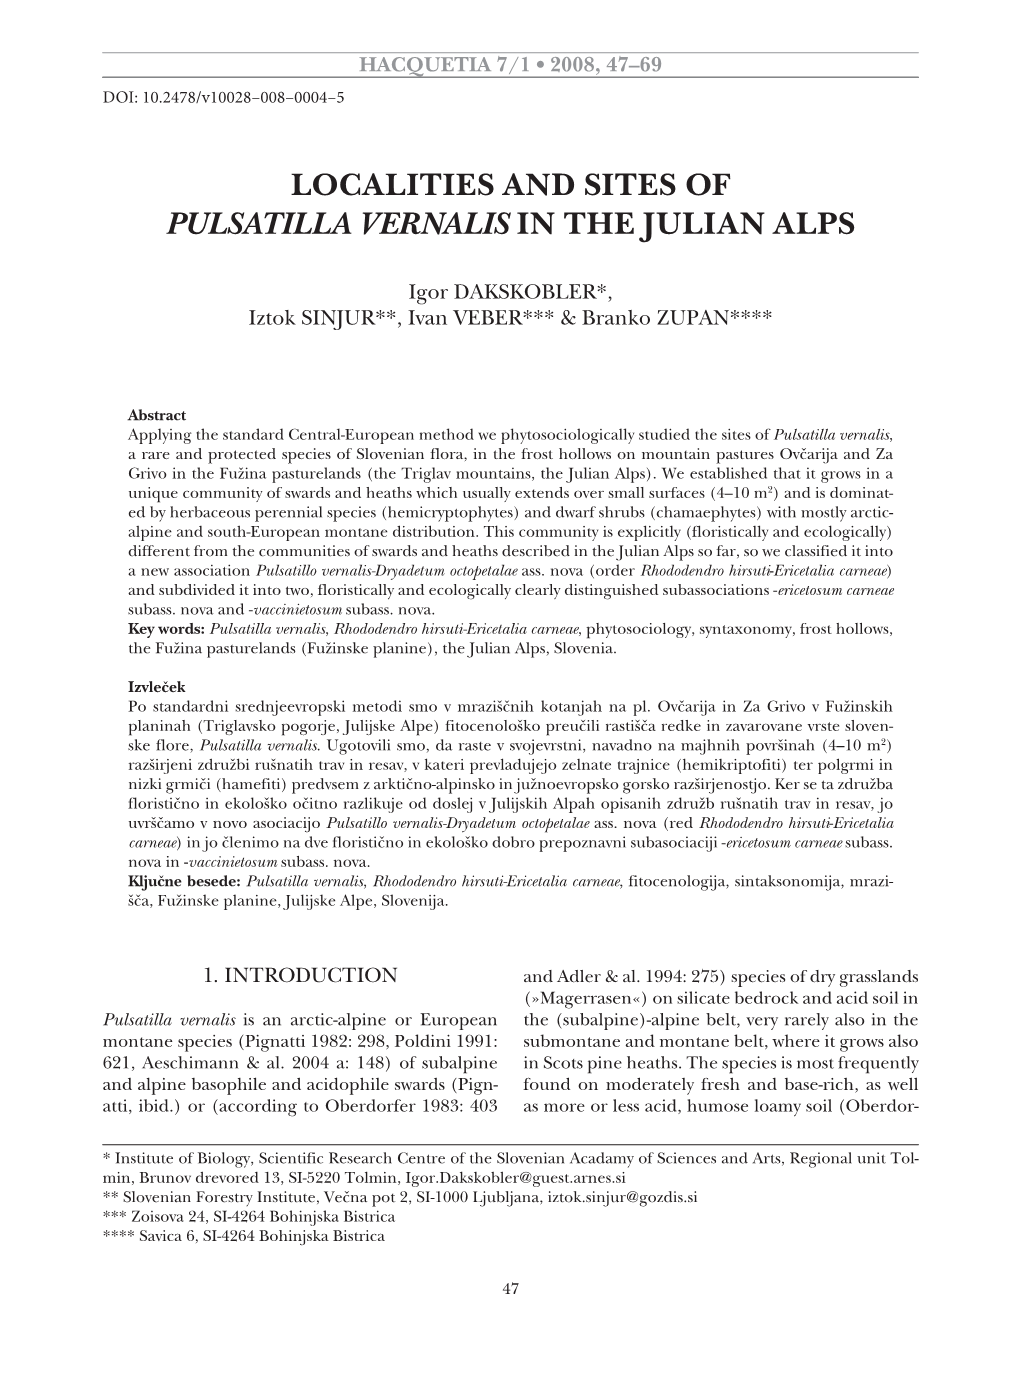 Localities and Sites of Pulsatilla Vernalis in the Julian Alps